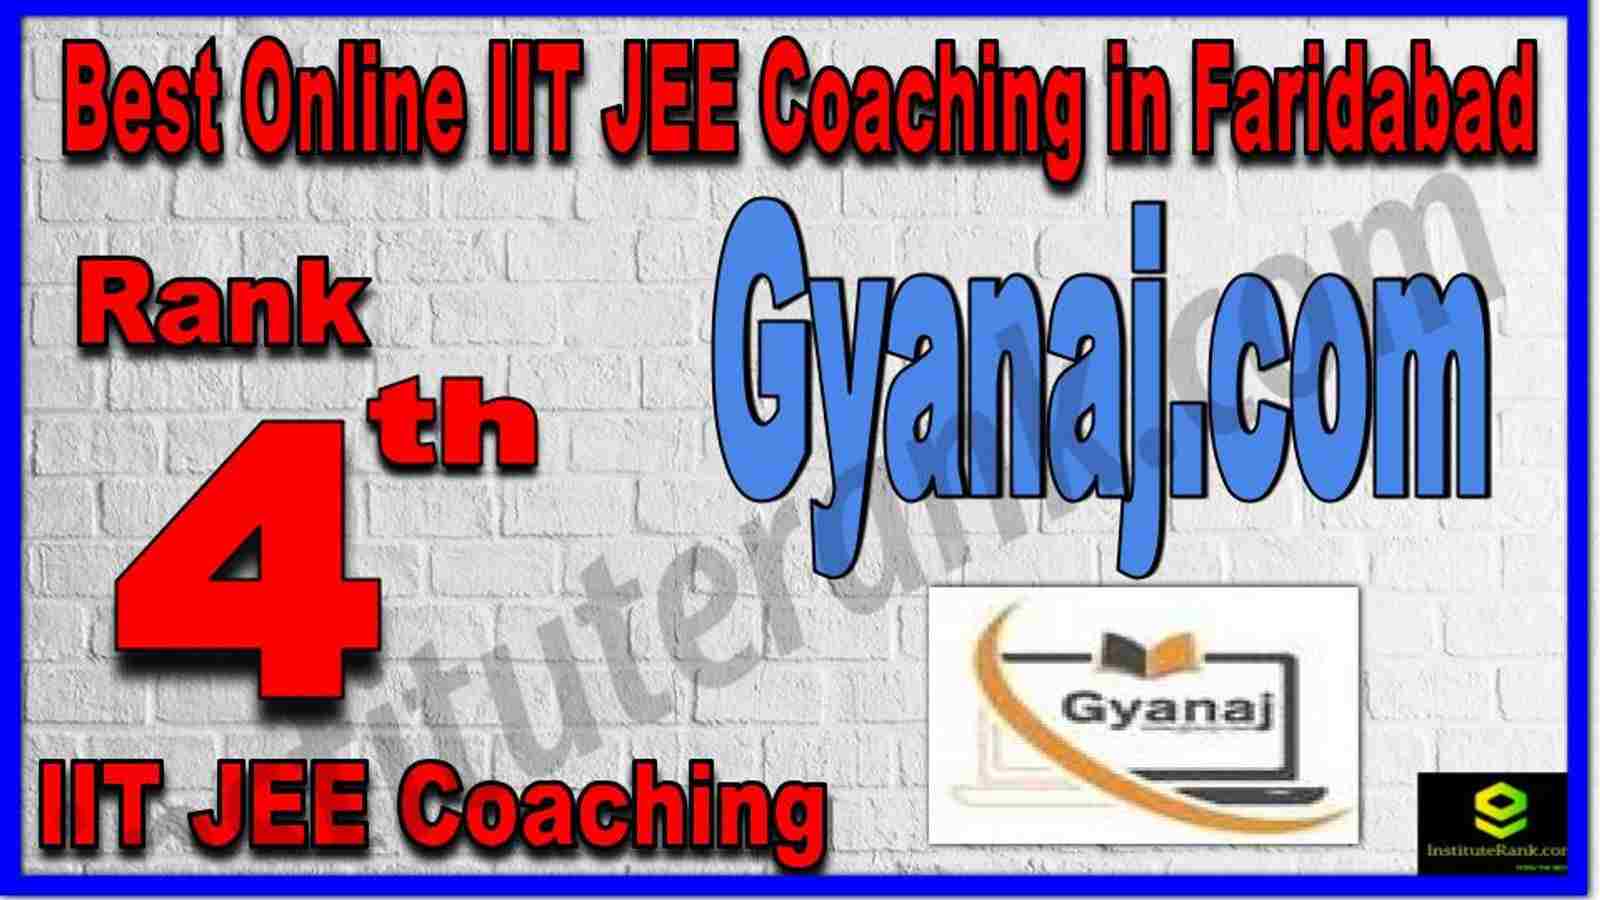 Rank 4th Best Online IIT JEE Coaching in Faridabad